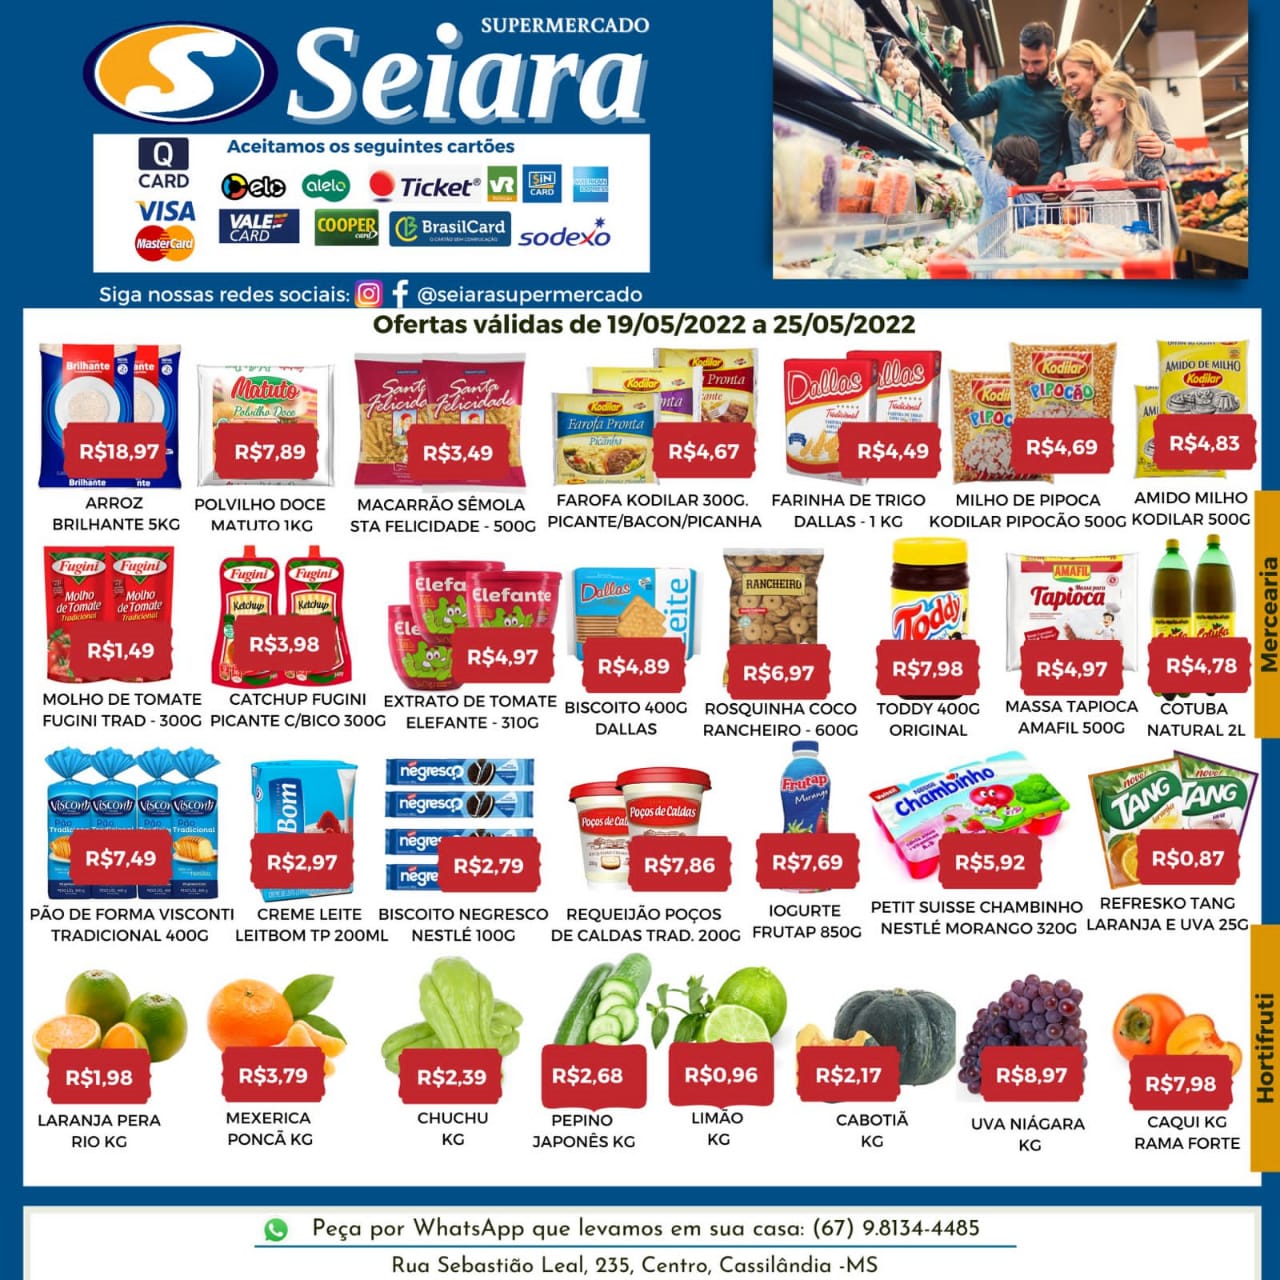 M&ecirc;s de anivers&aacute;rio Seiara Supermercado Econ&ocirc;mico: veja as novas ofertas da semana